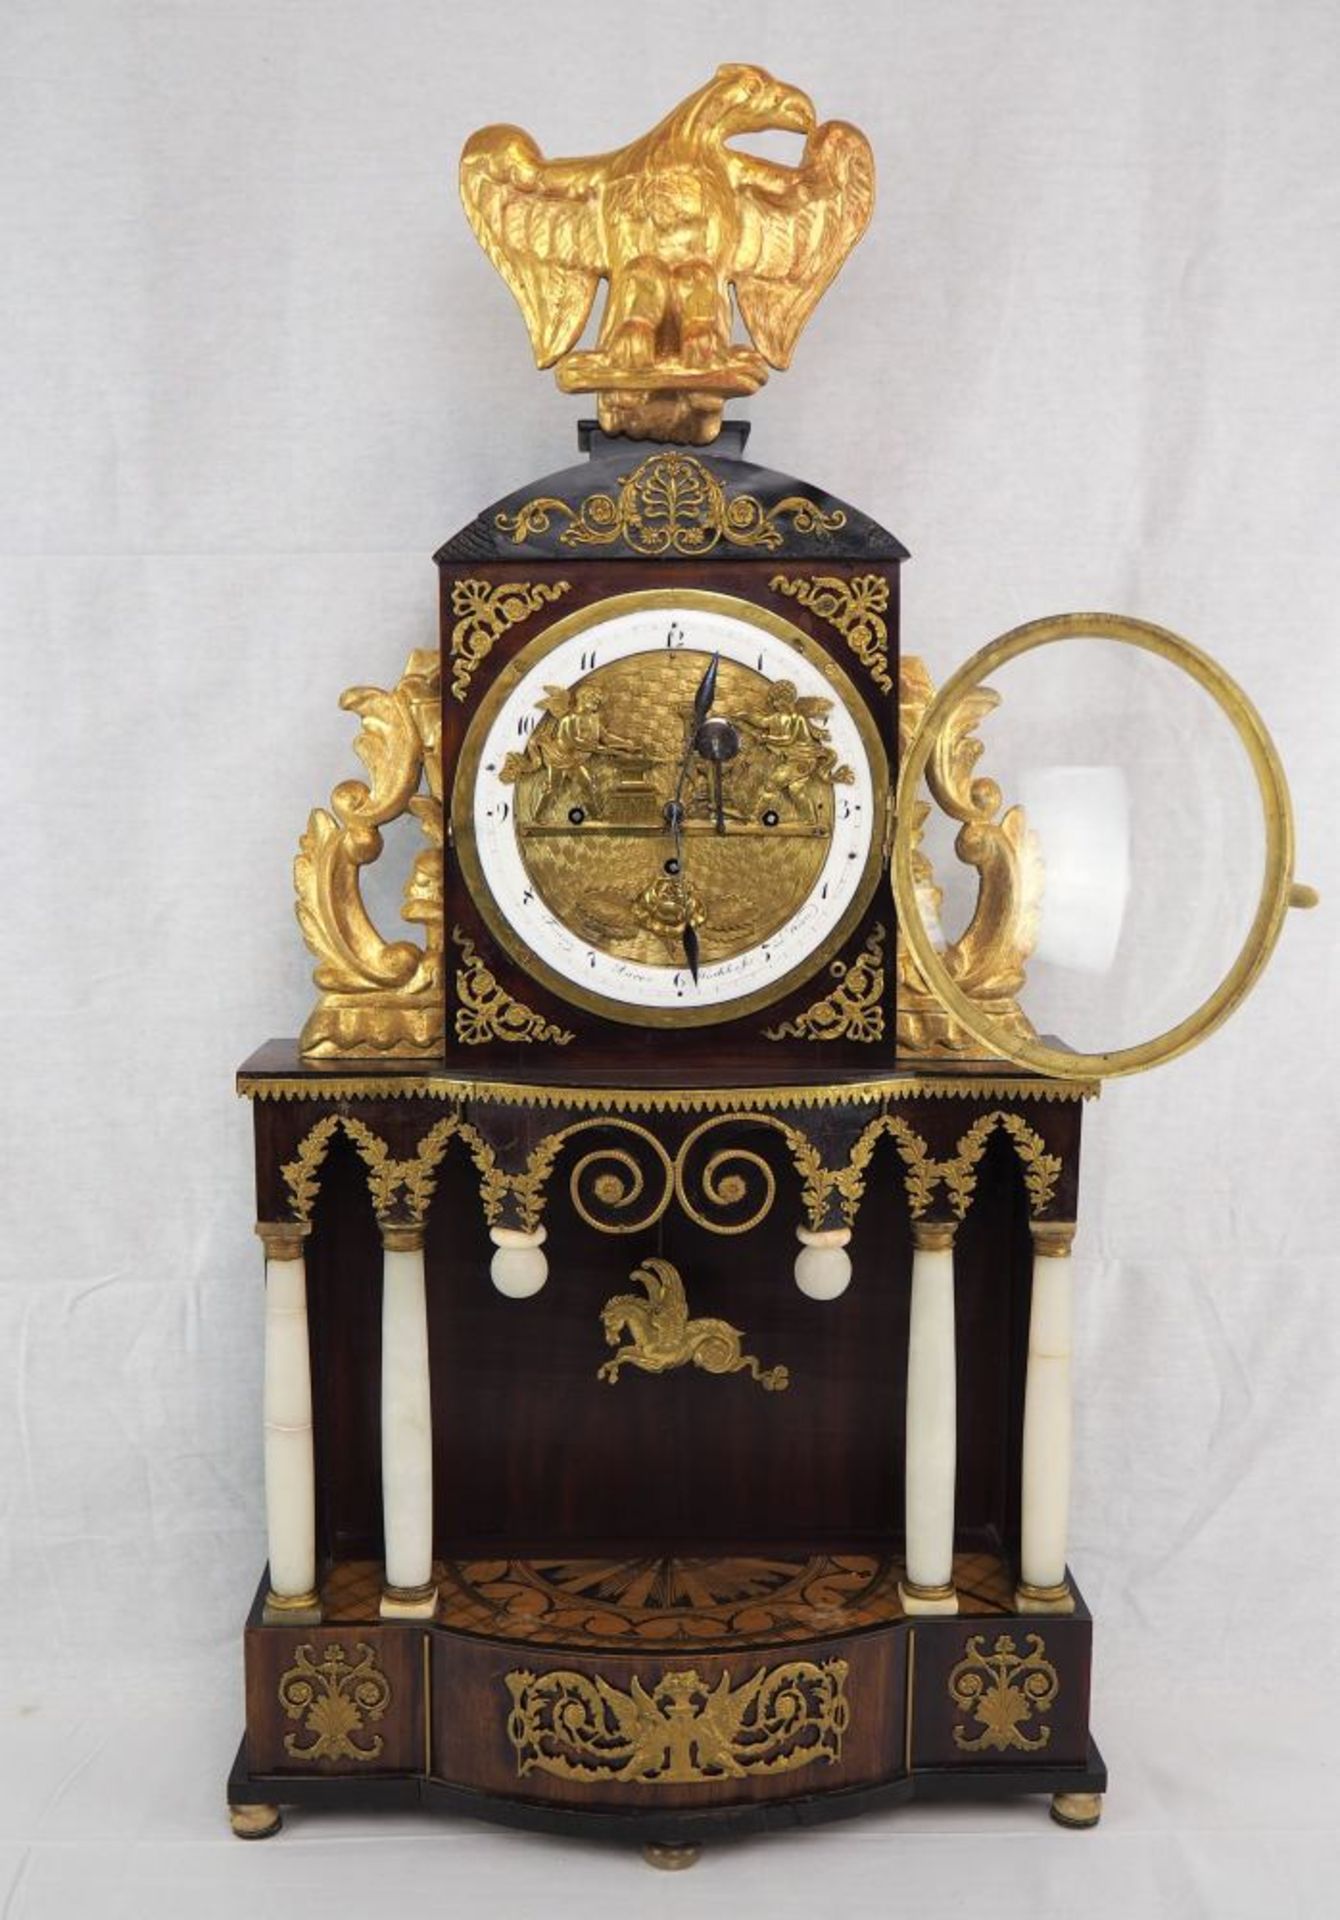 Viennese portal clock - house watch around 1820 - Image 3 of 9